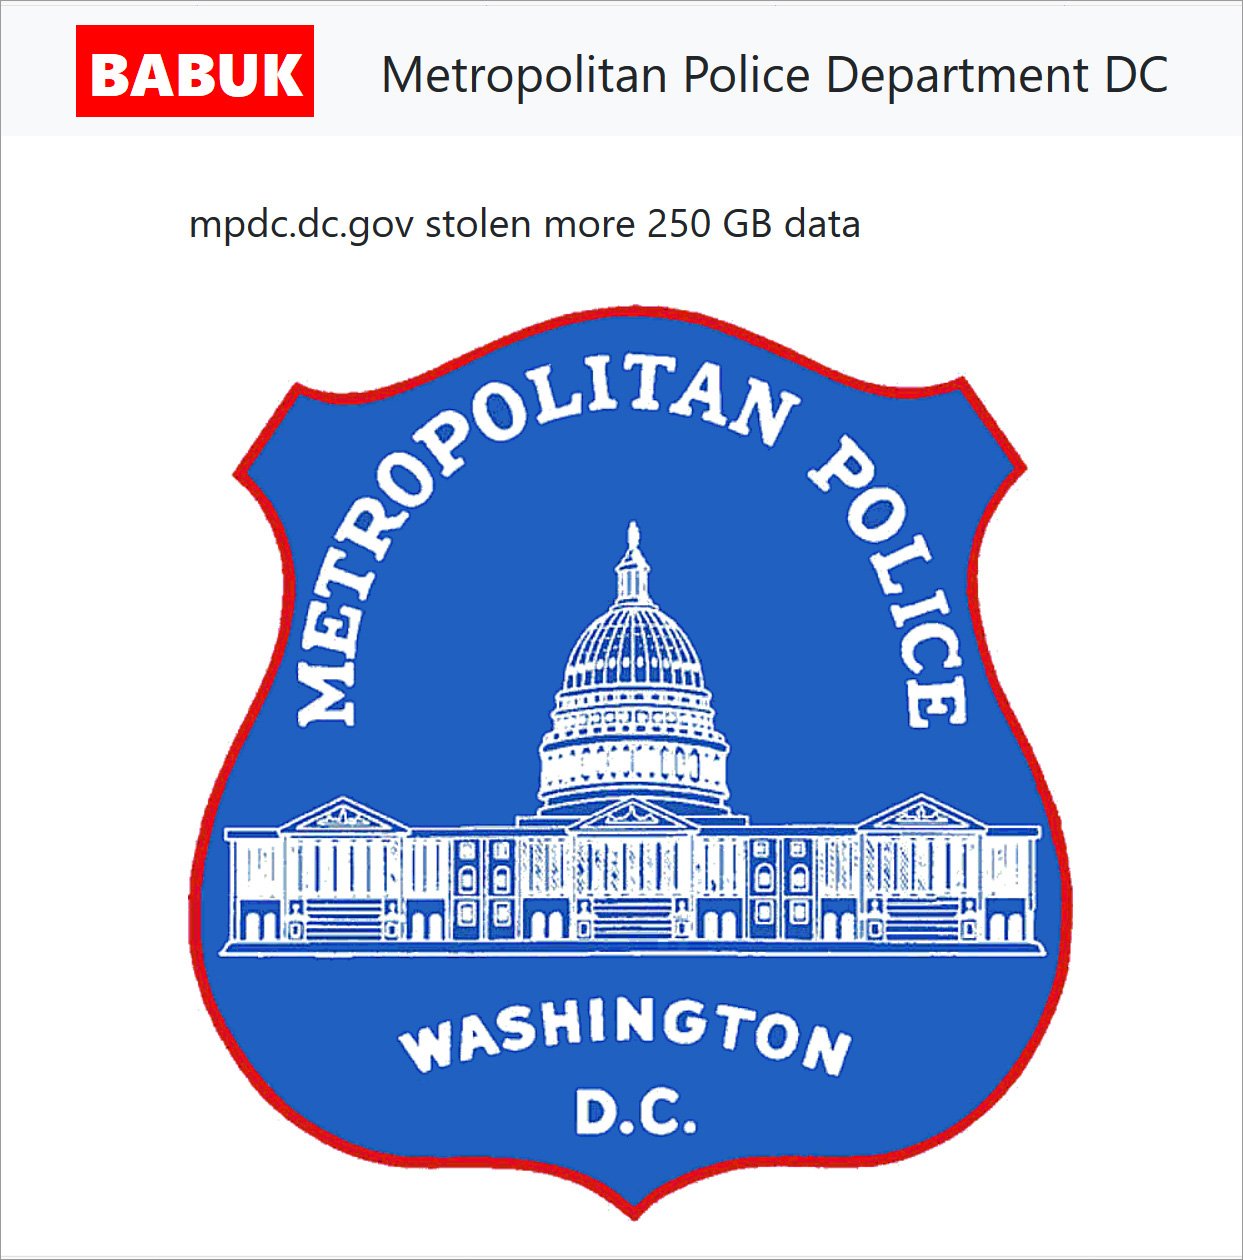 Babuk data leak page for the Metropolitan Police Department